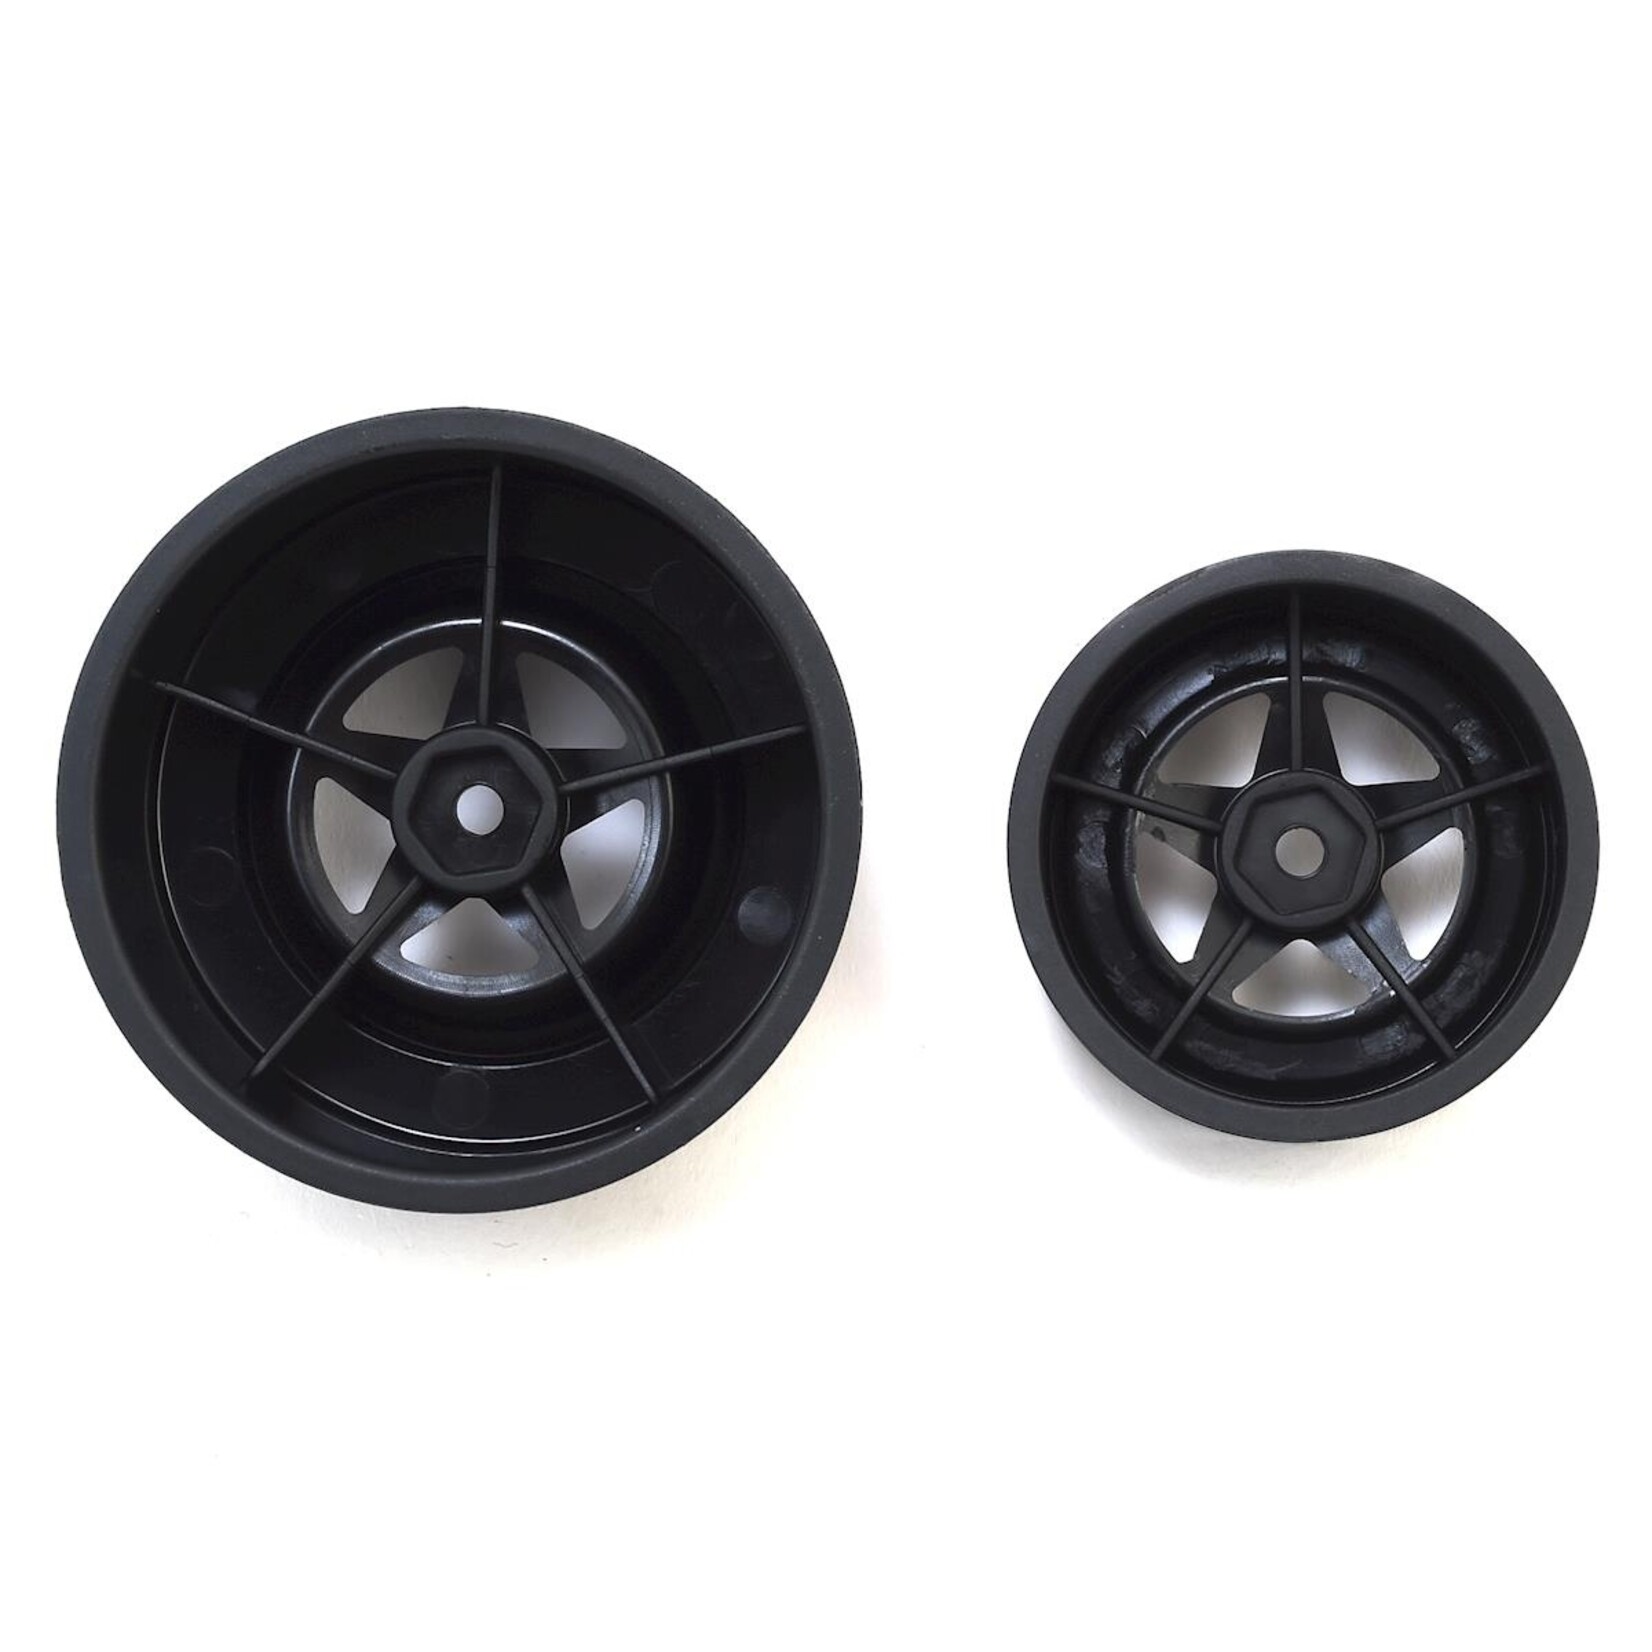 JConcepts JConcepts Startec Street Eliminator Drag Racing Wheels (Black) w/12mm Hex (2x Rear SCT Wheels & 2x Front Buggy Wheels) #3387B